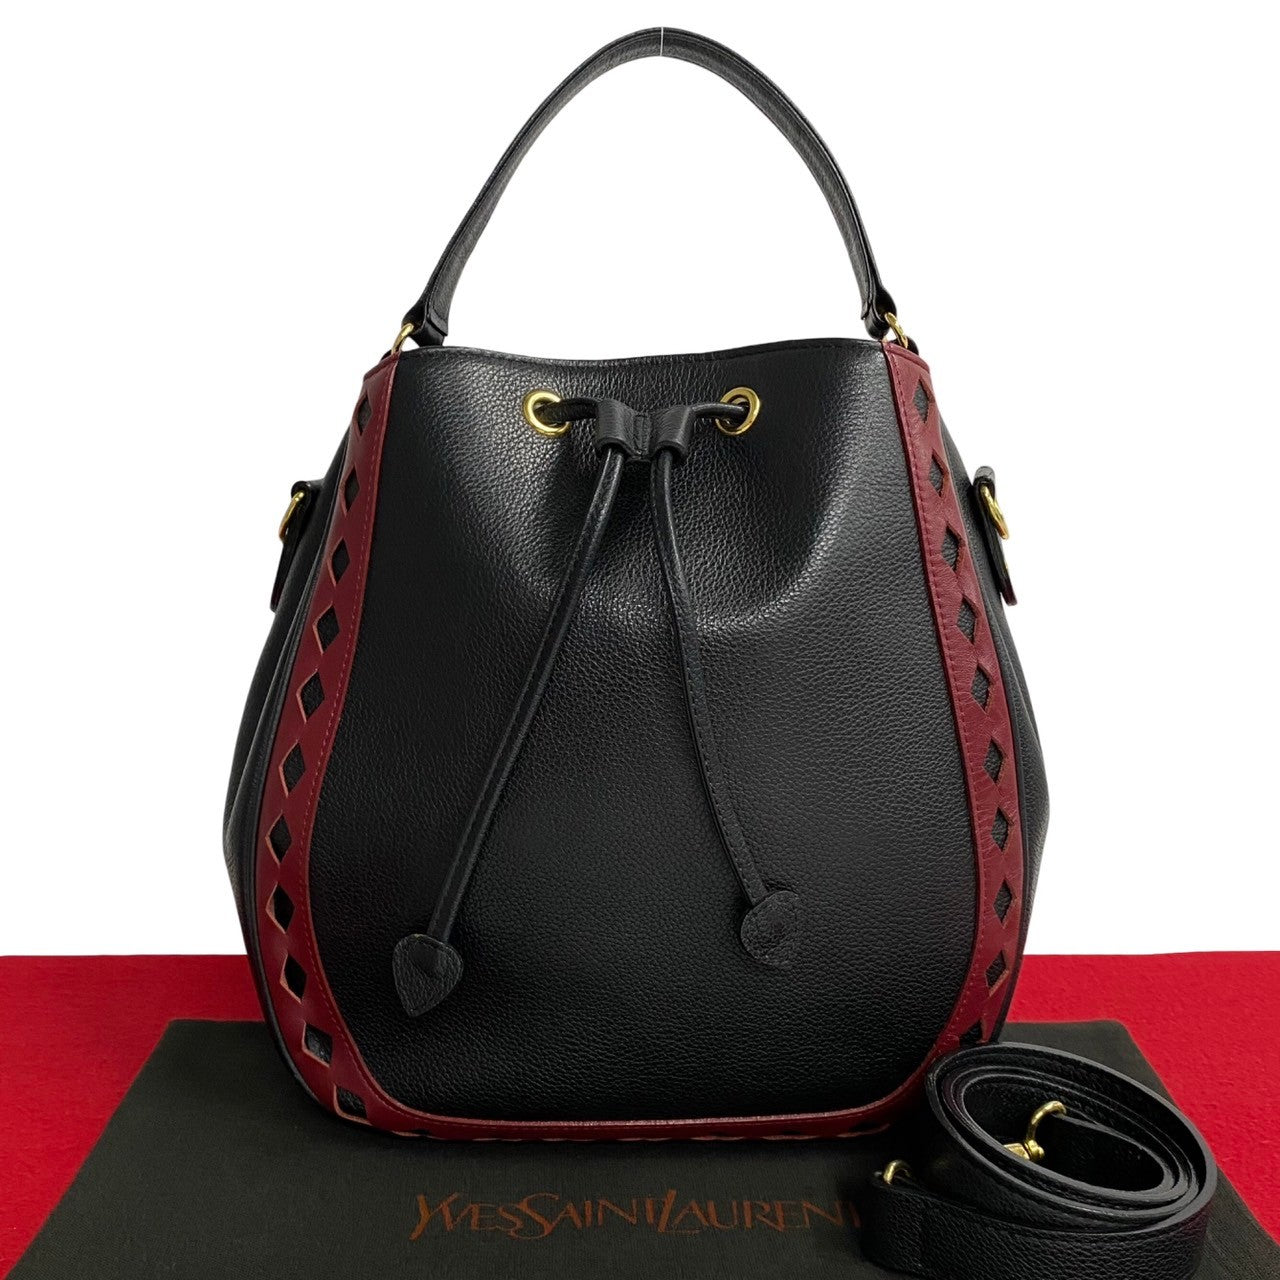 Yves Saint Laurent Diamond Cut Leather Drawstring Bag Leather Handbag in Excellent condition